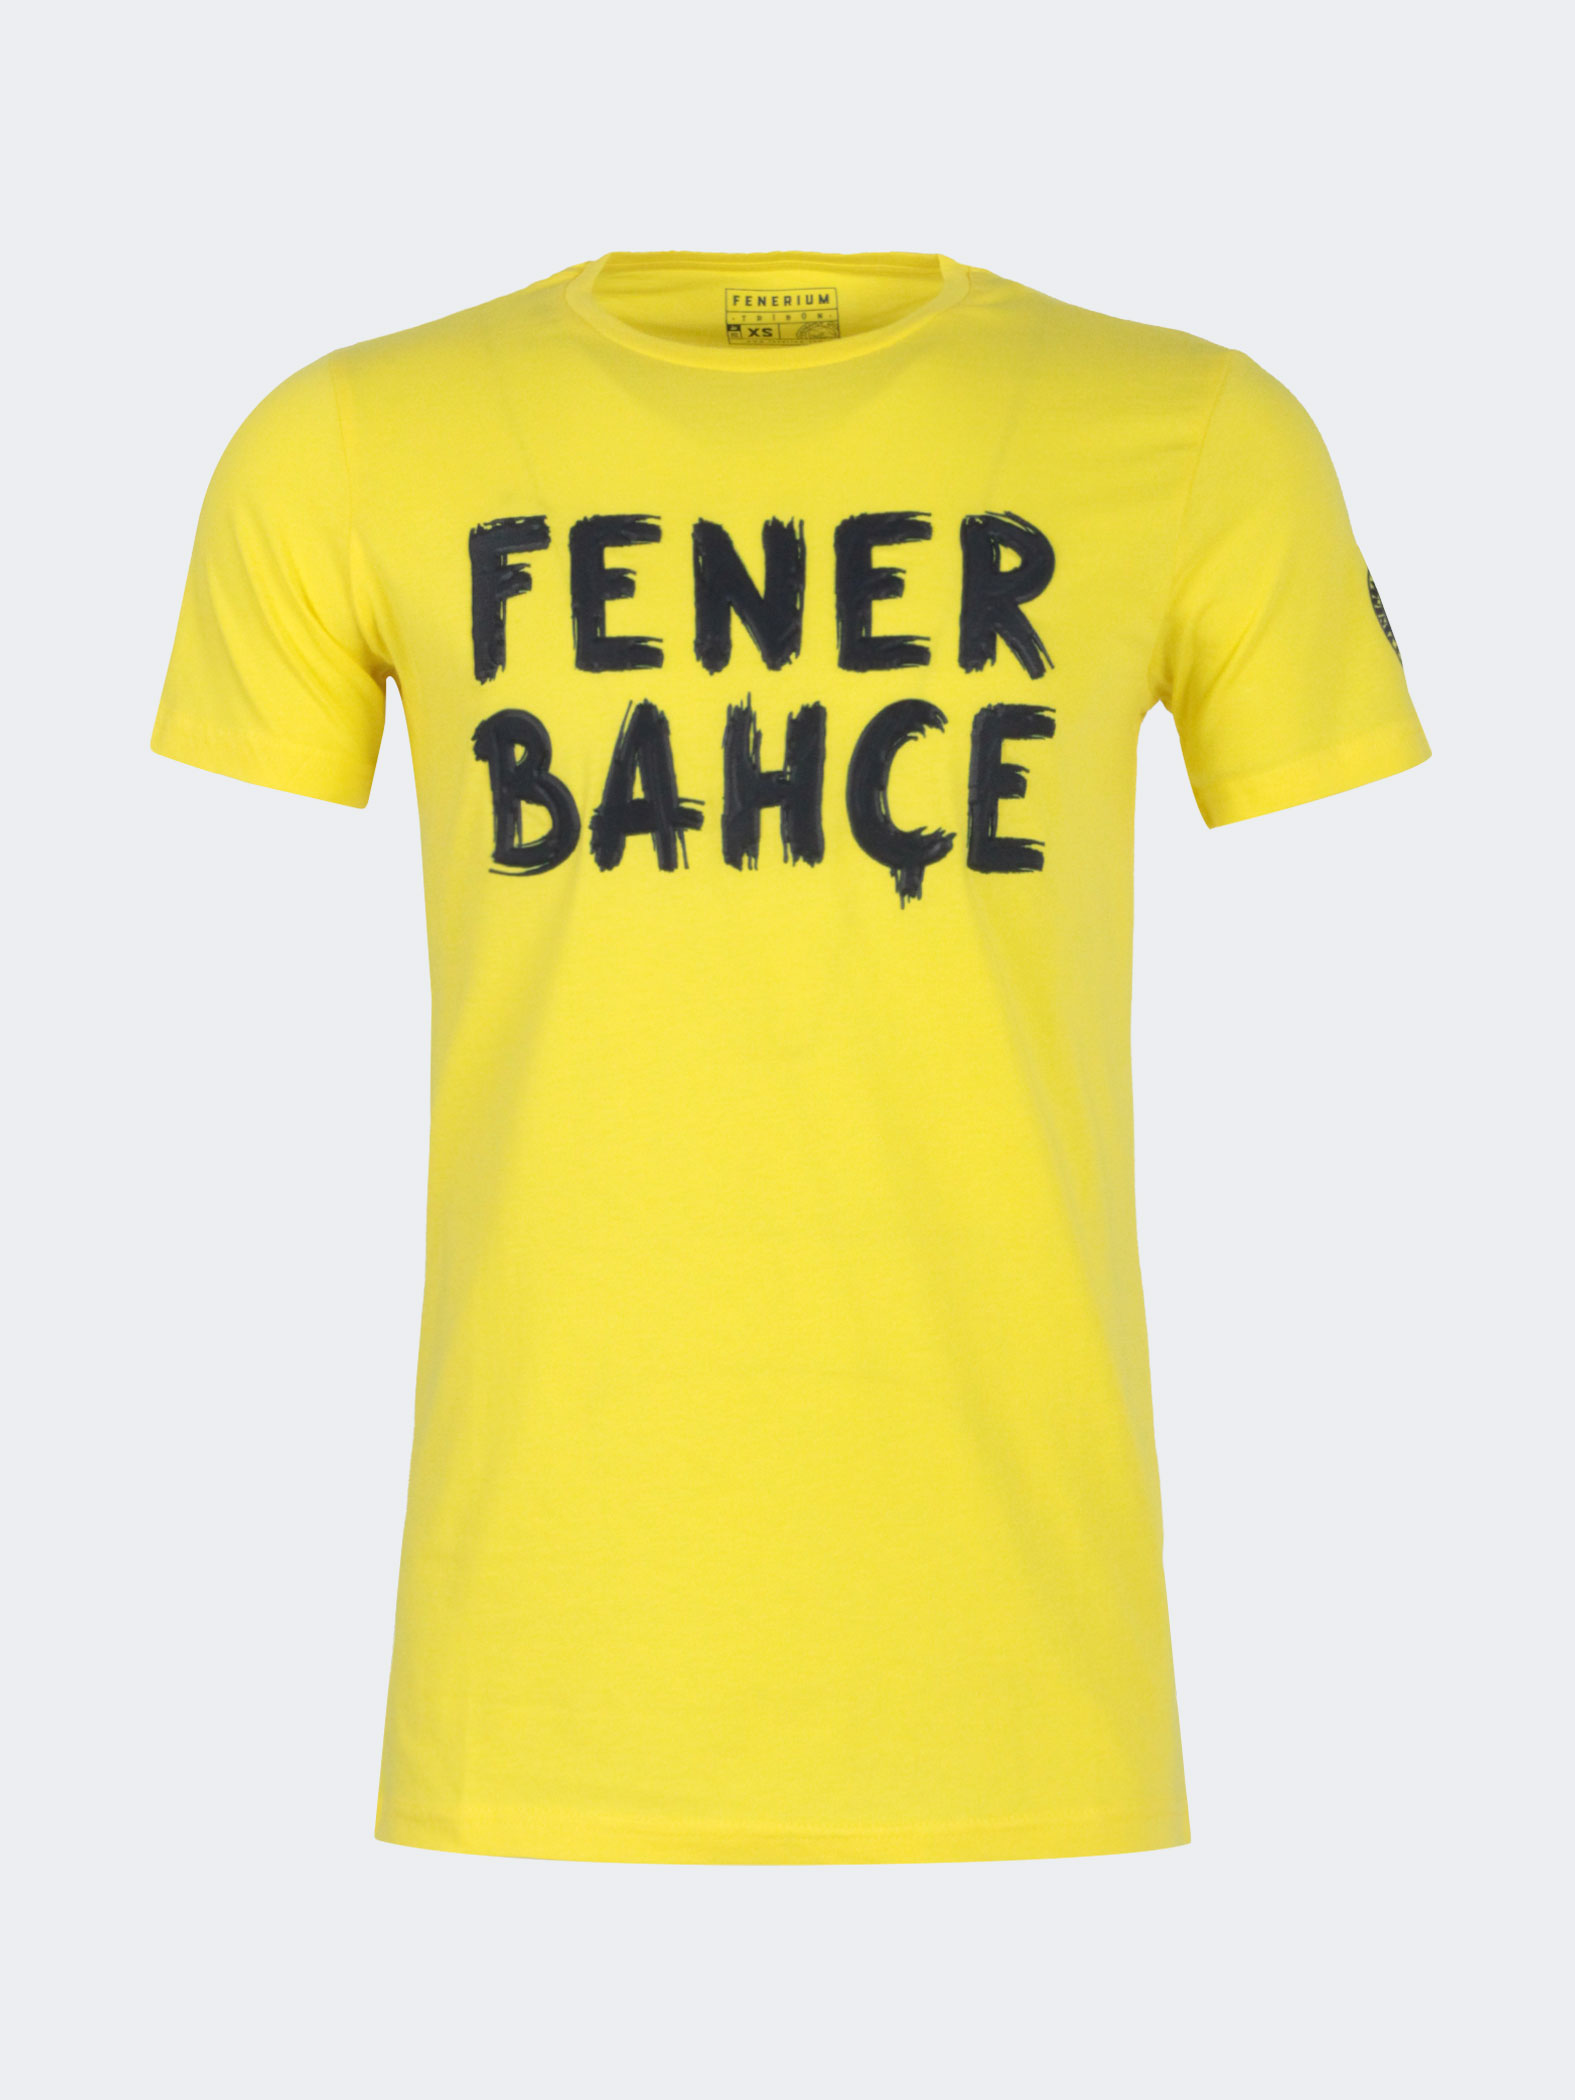 Men's Tribune Fenerbahce Print Tshirt